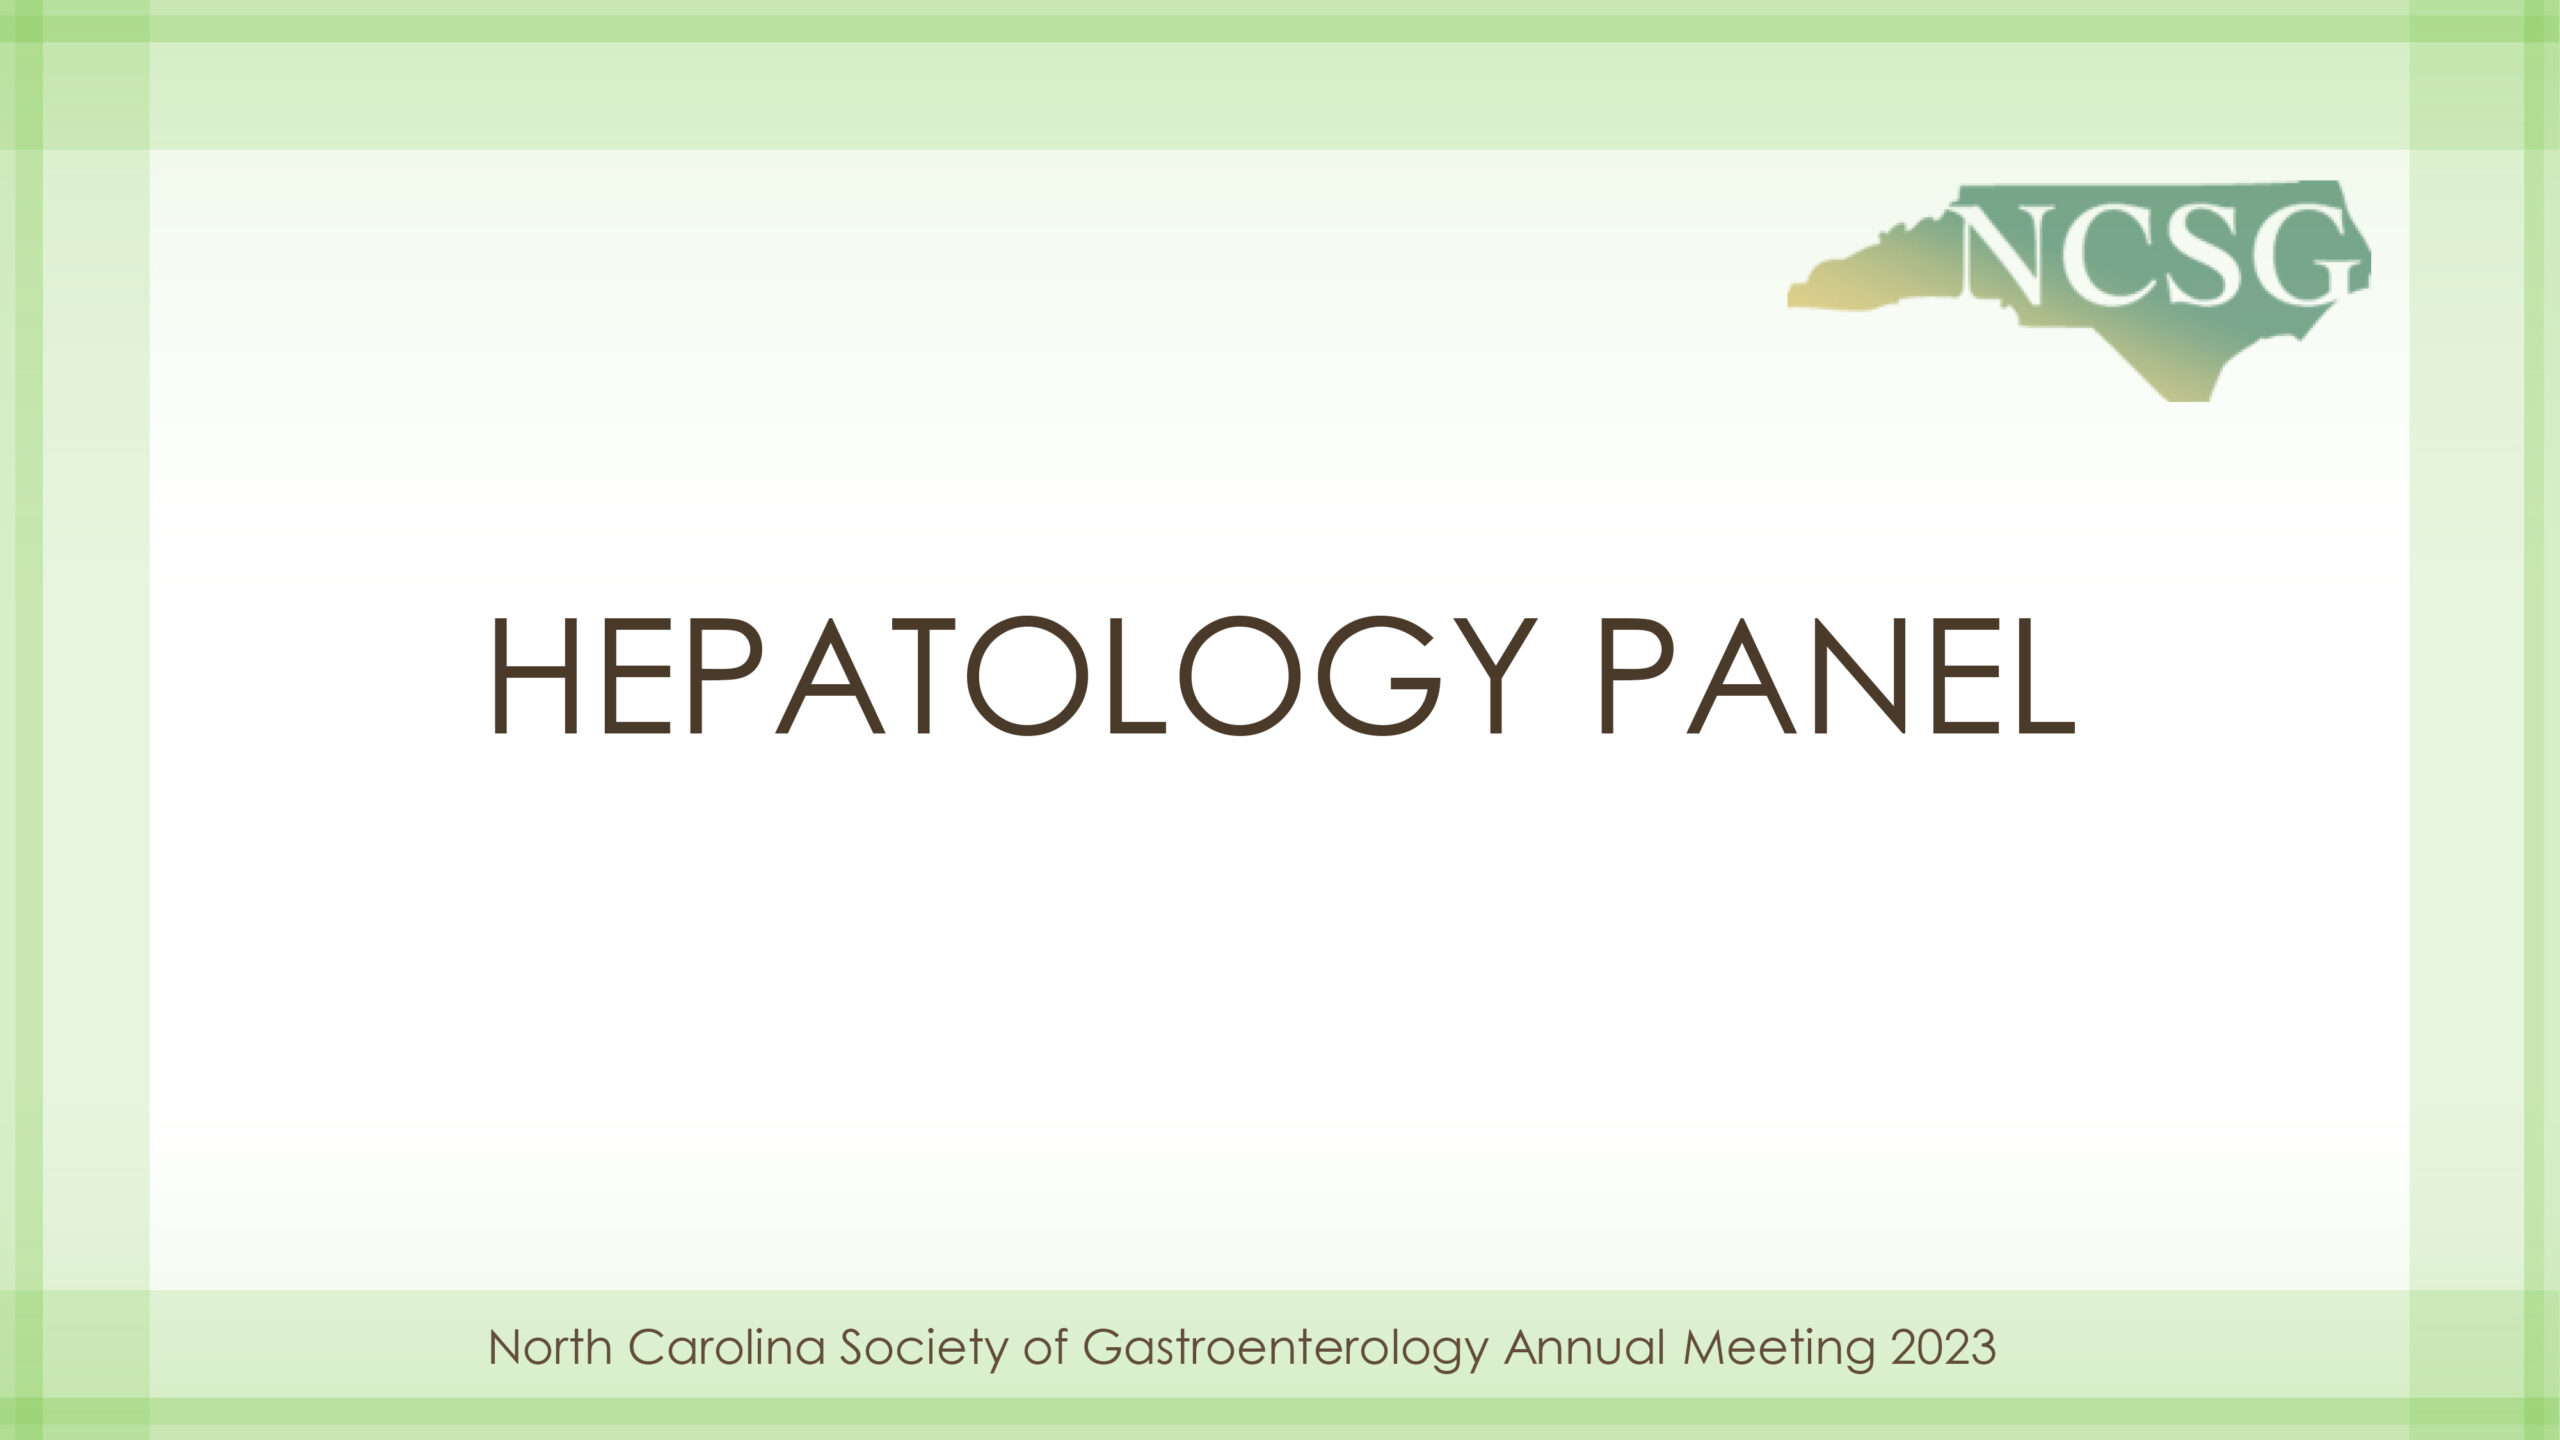 6.5 NCSG 2023 Hepatology Panel